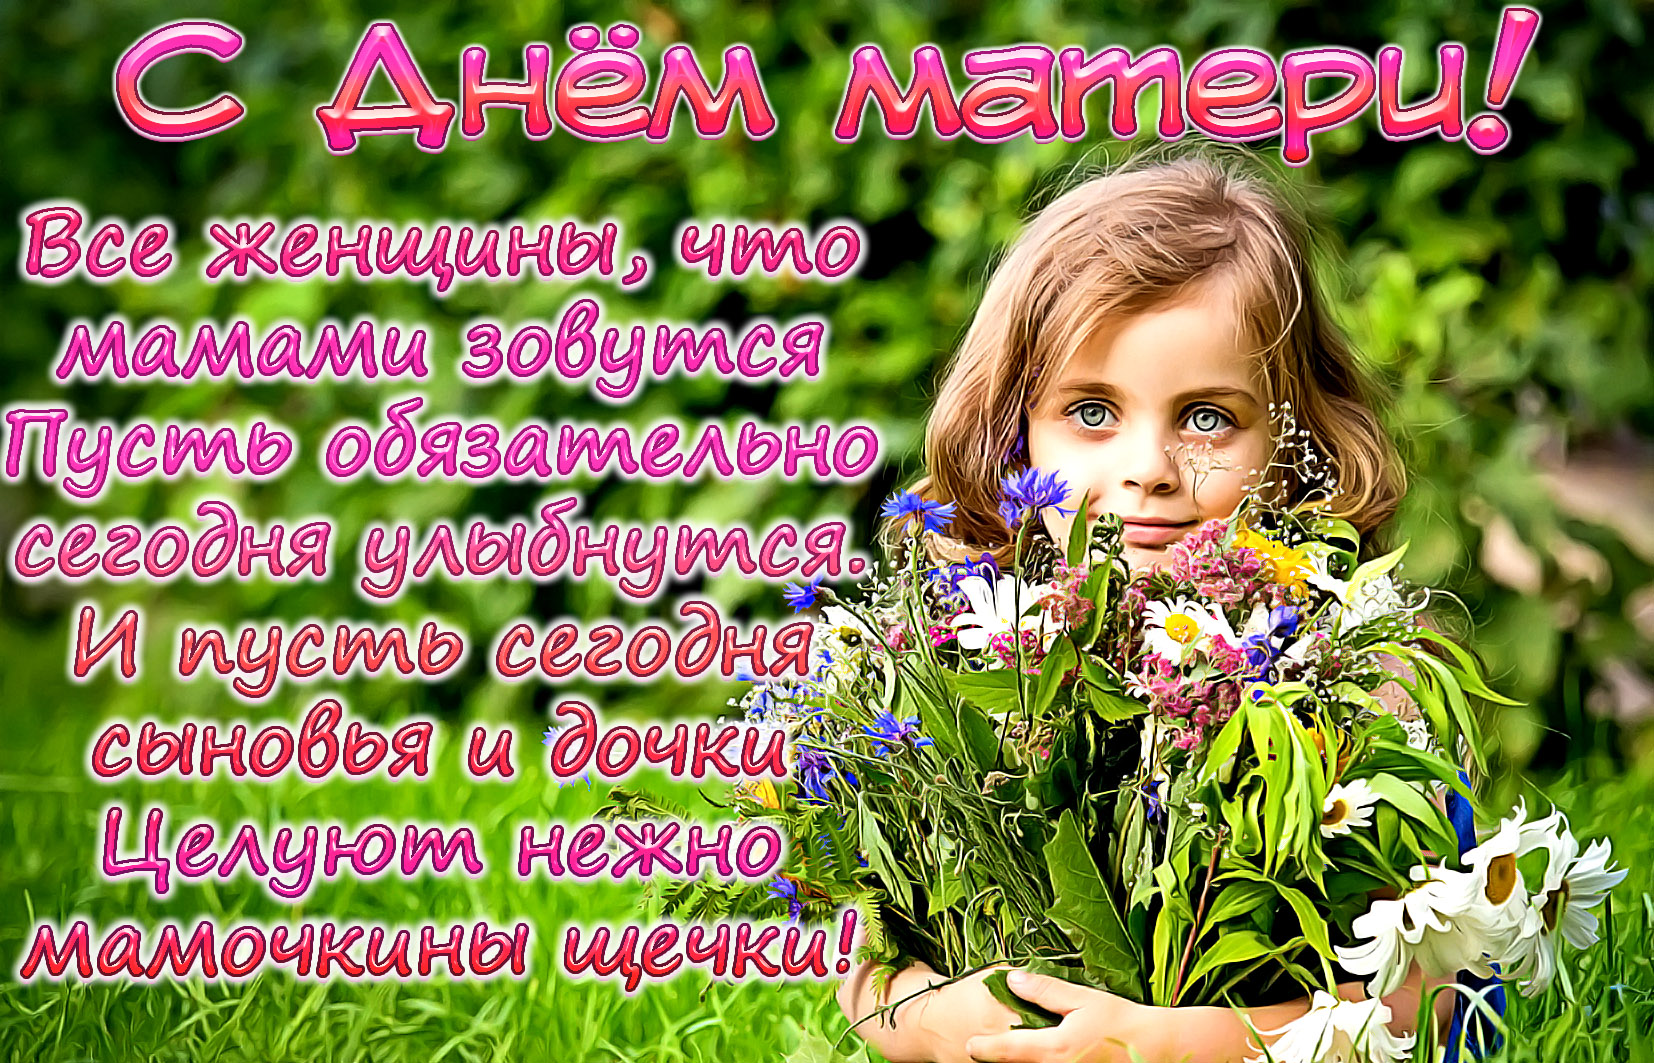 Девочка с цветами на картинке на День матери.